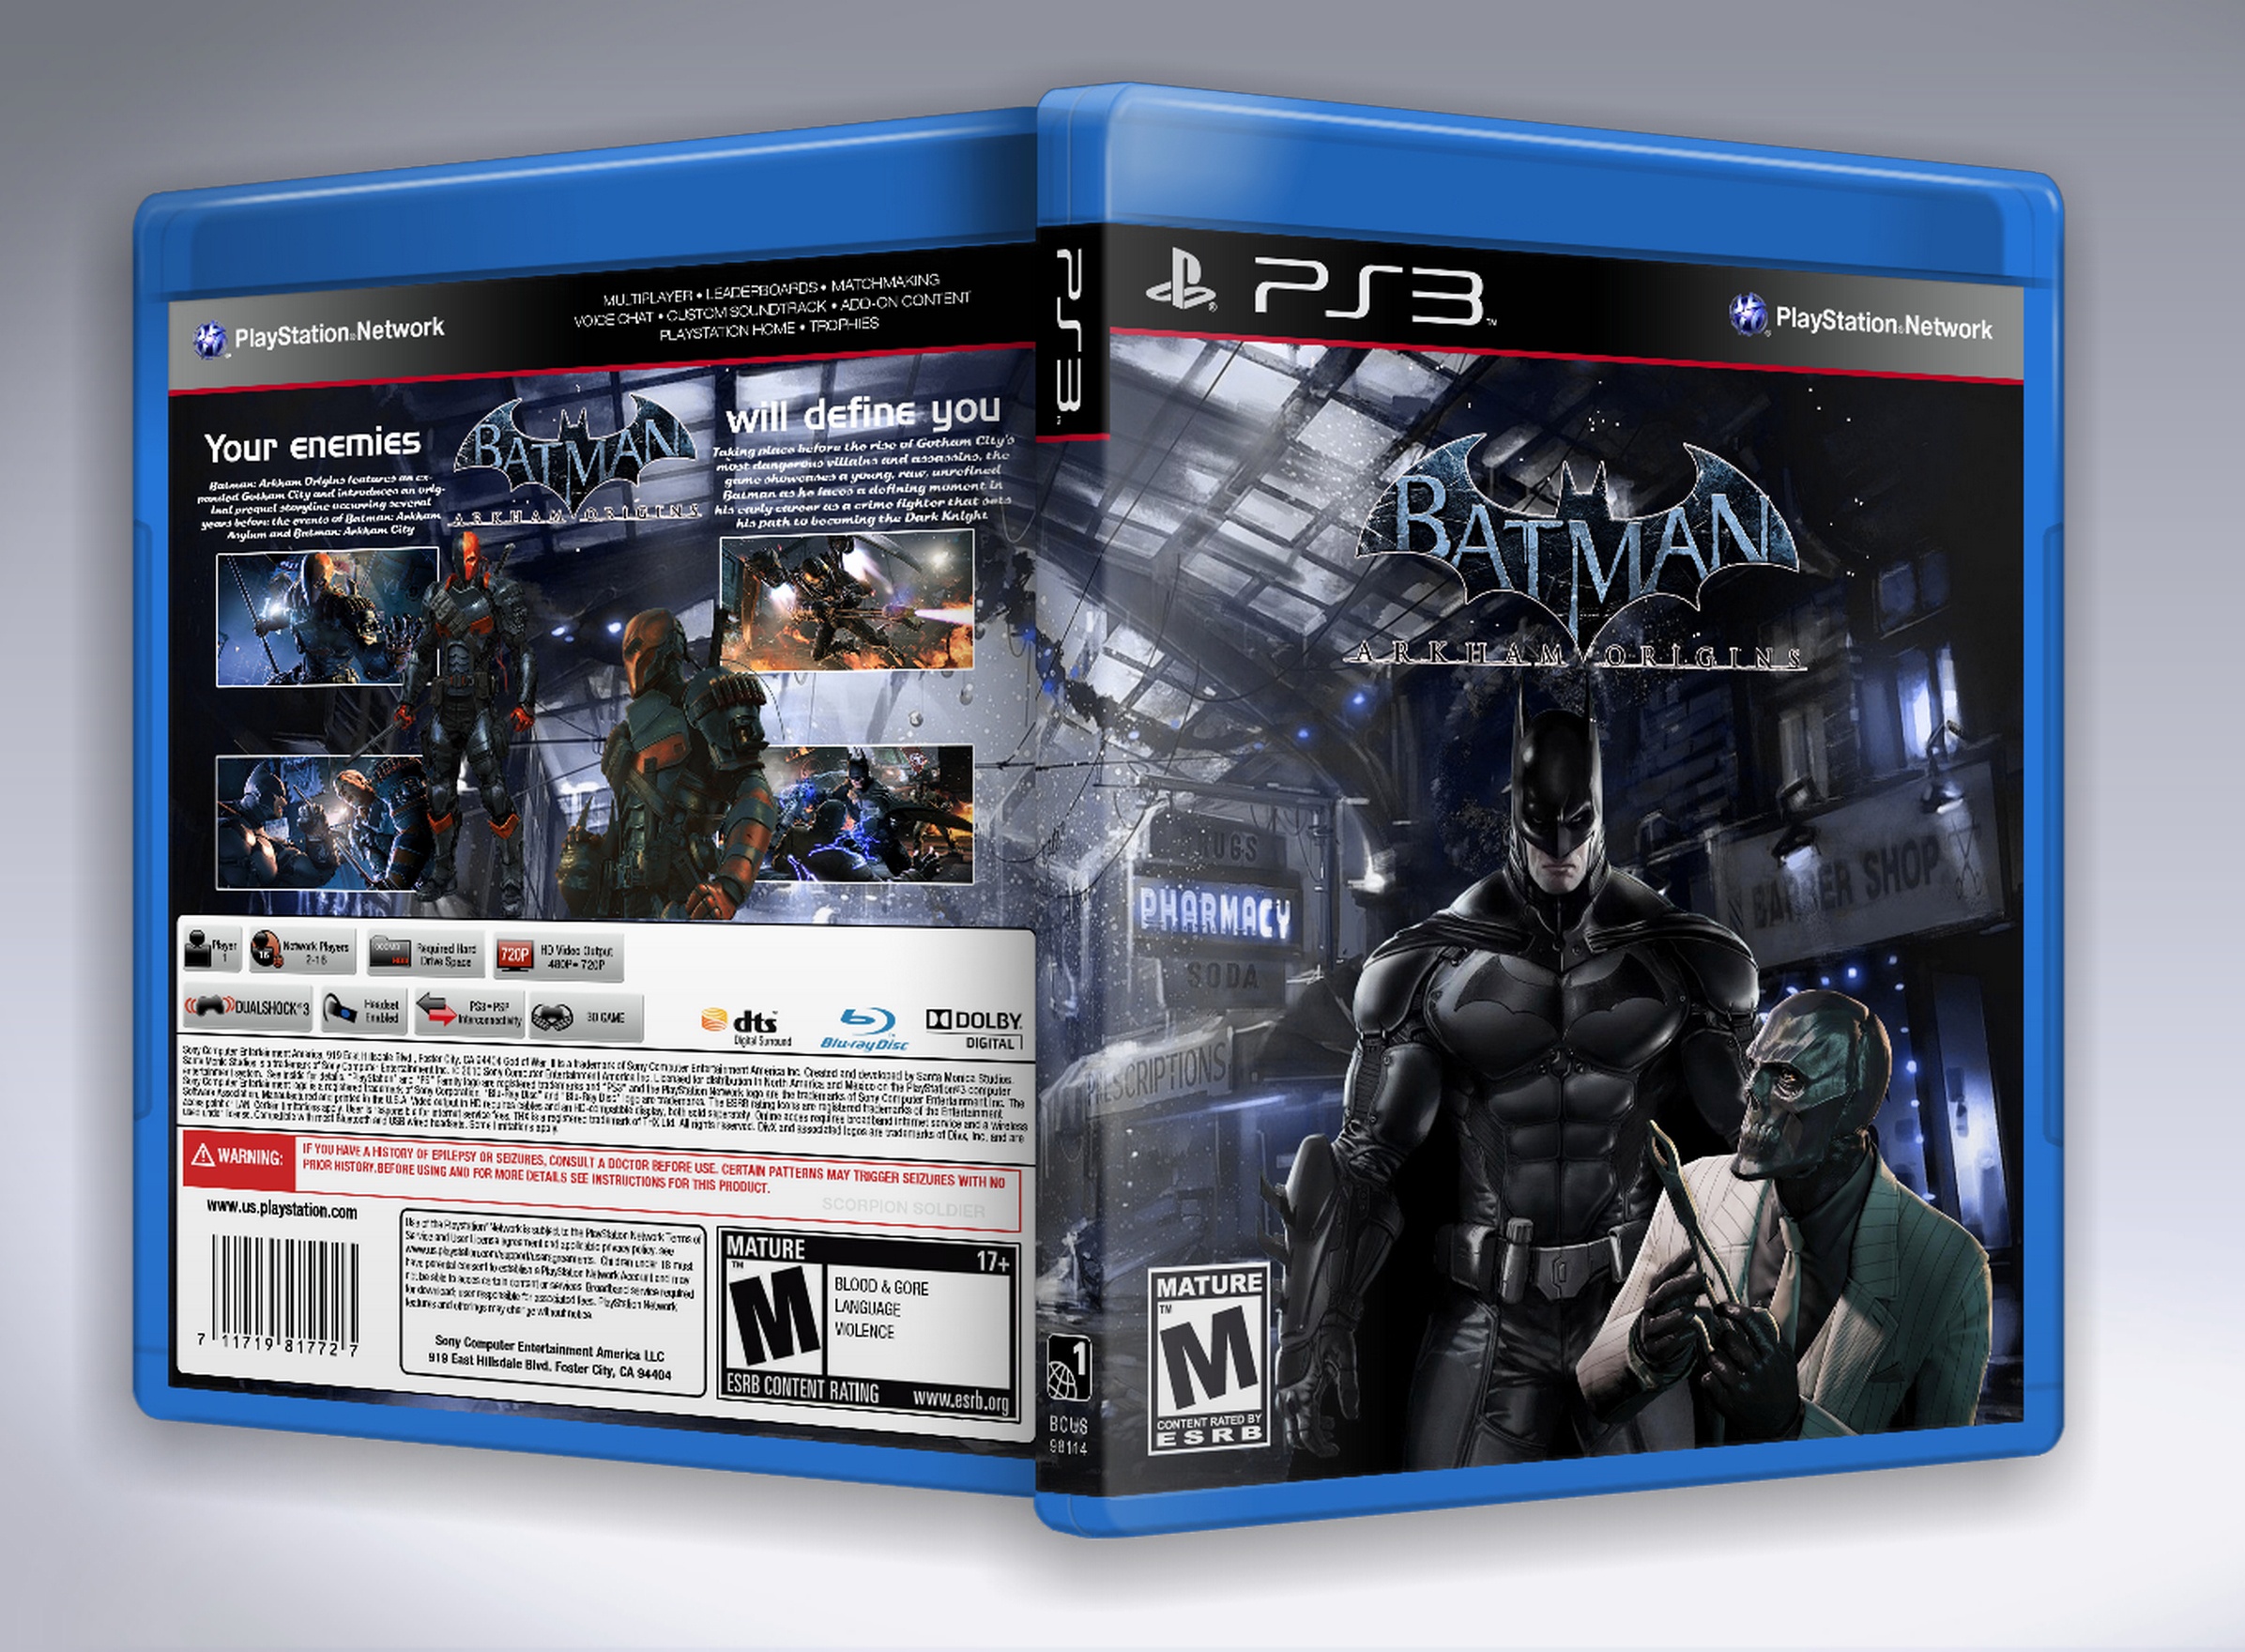 Batman Arkham Origins box cover